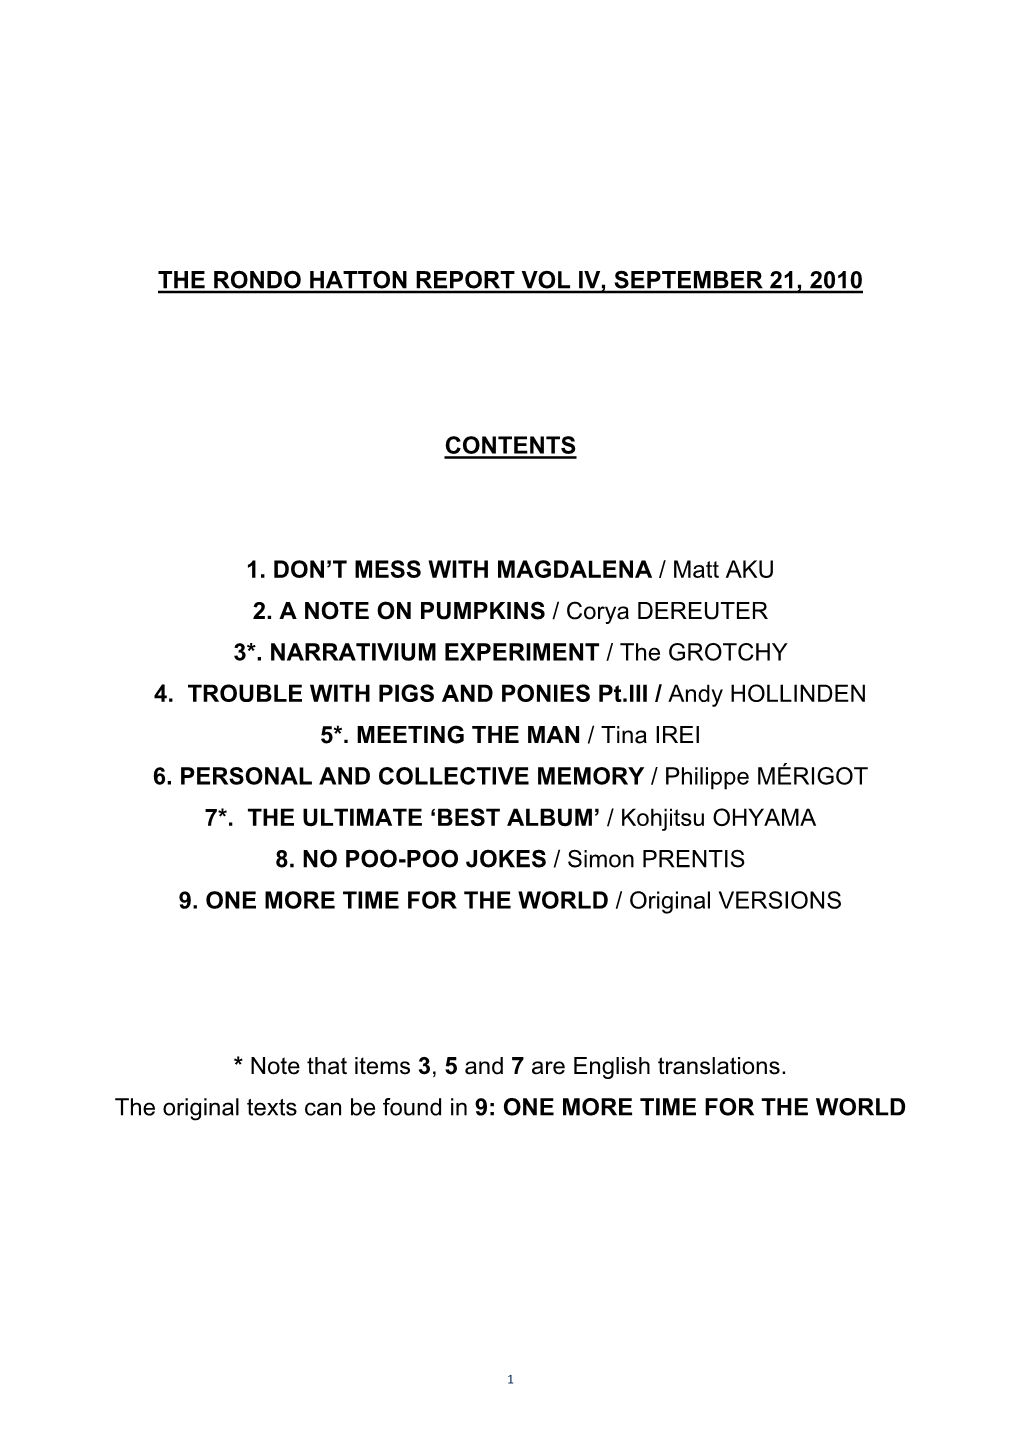 The Rondo Hatton Report Vol Iv, September 21, 2010